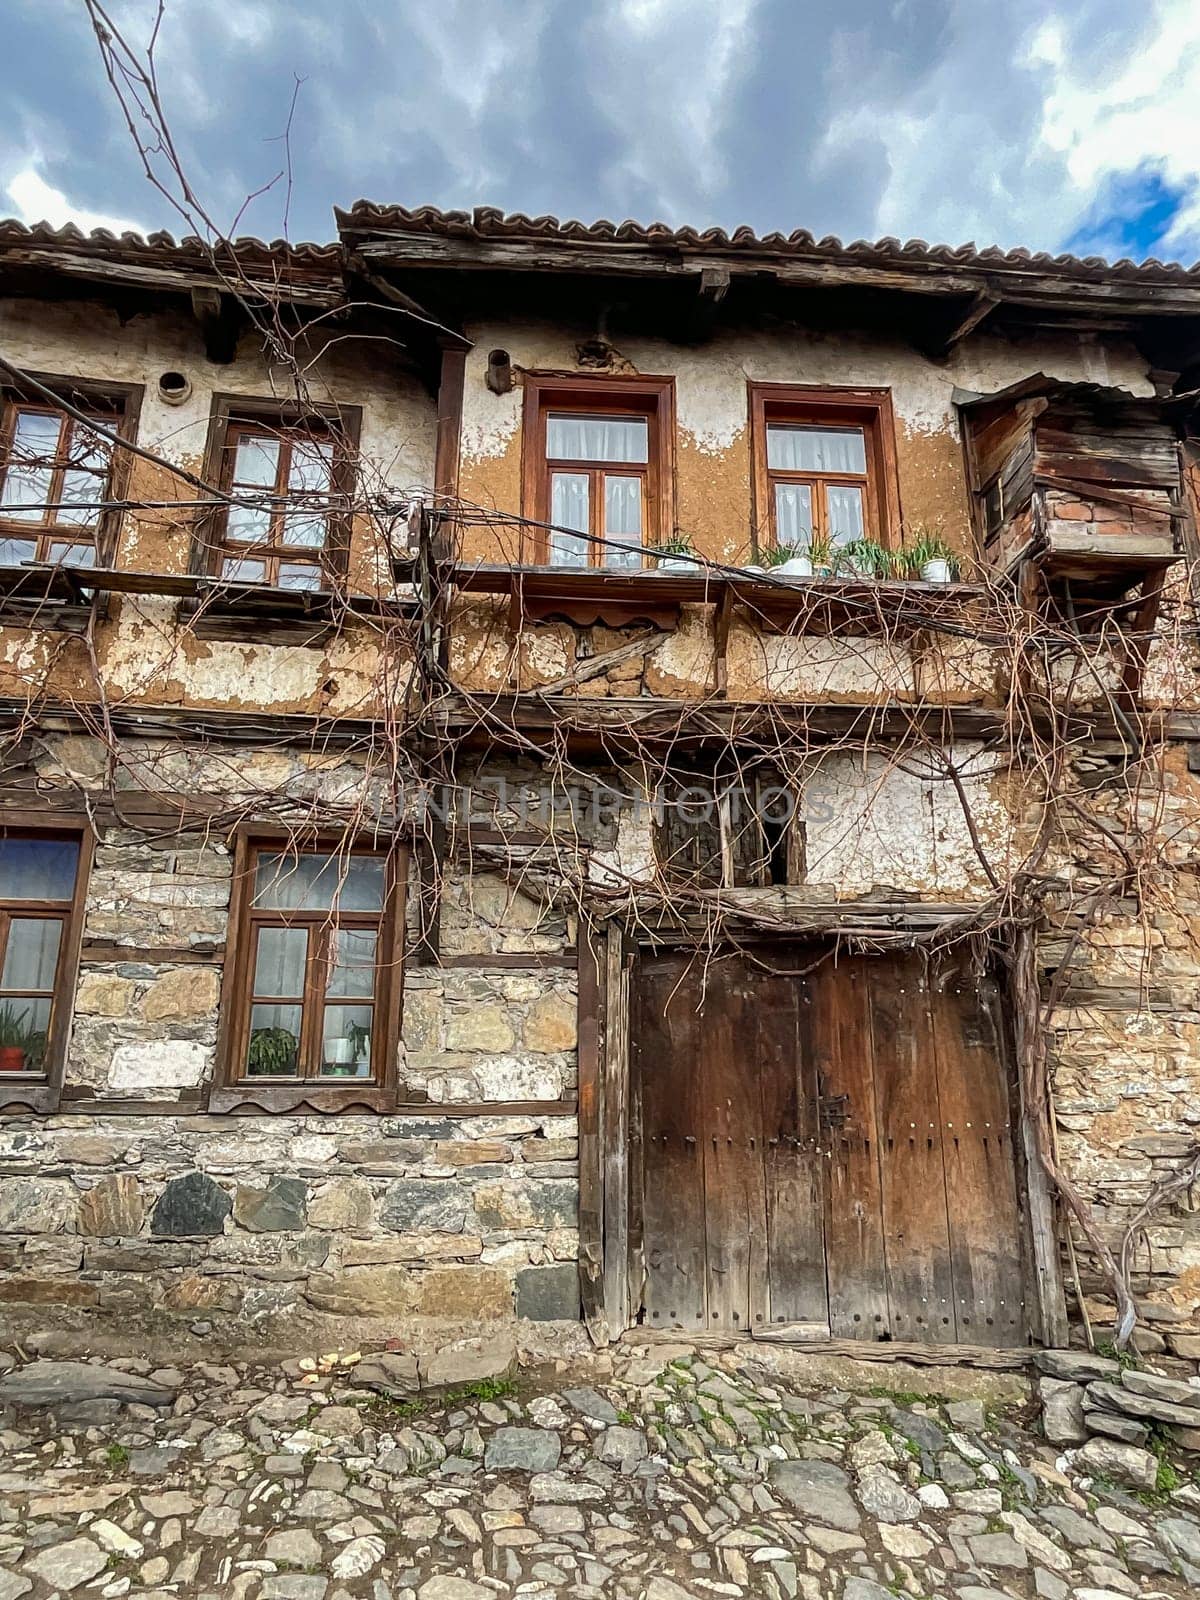 Cumalikizik village is a 700 years old Ottoman village in Turkey. Old Ottoman village in Bursa city, Turkey. Narrow street with old Ottoman houses